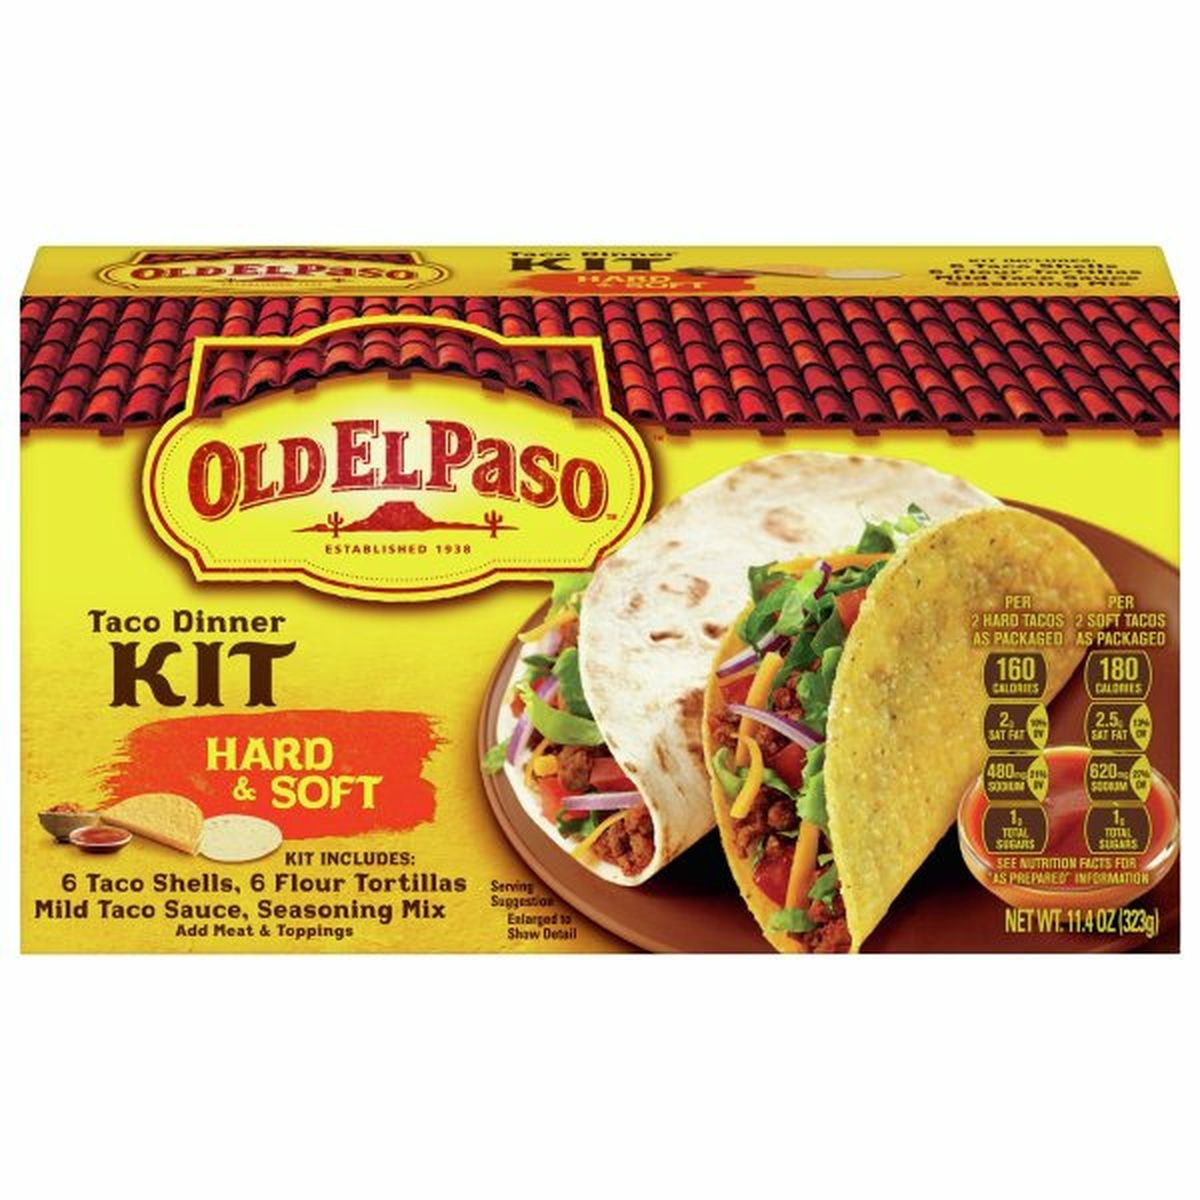 Calories in Old El Paso Taco Dinner Kit, Hard & Soft